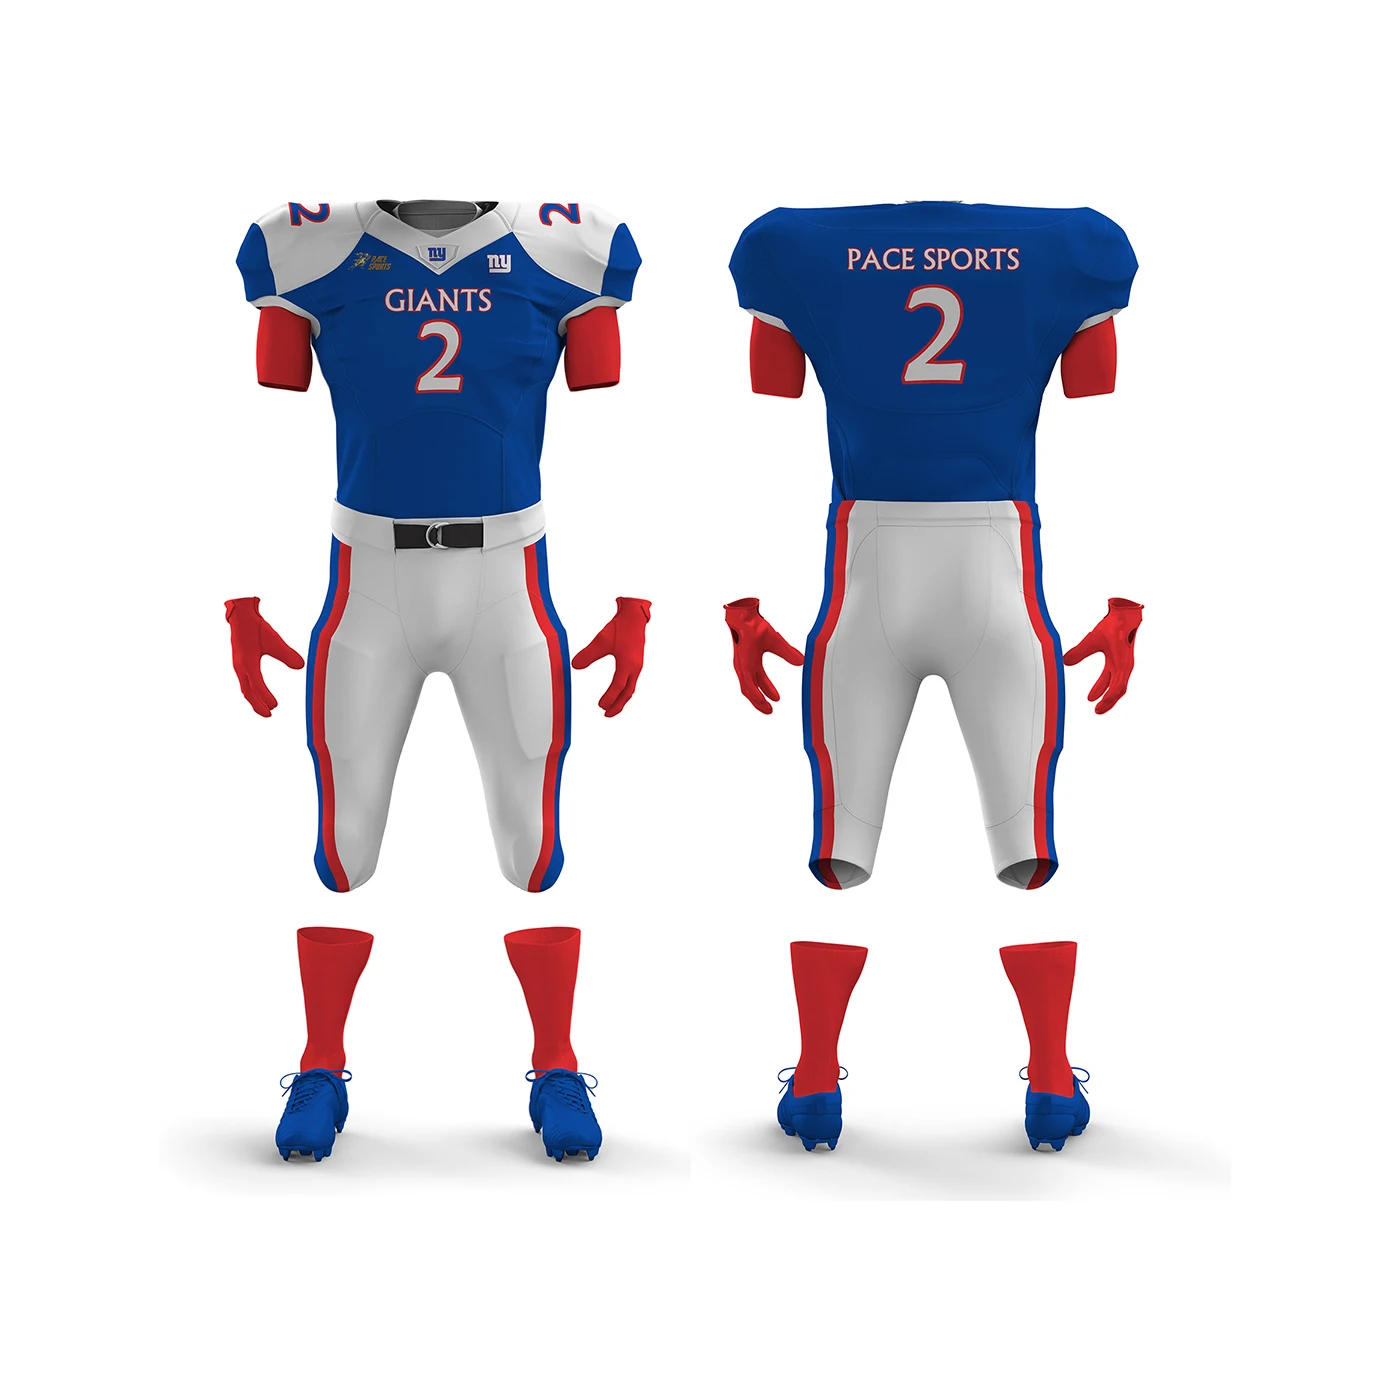 Men Sportswear Sublimation Football Shirt Customized American Football  Uniform - China Sportswear and Clothing price